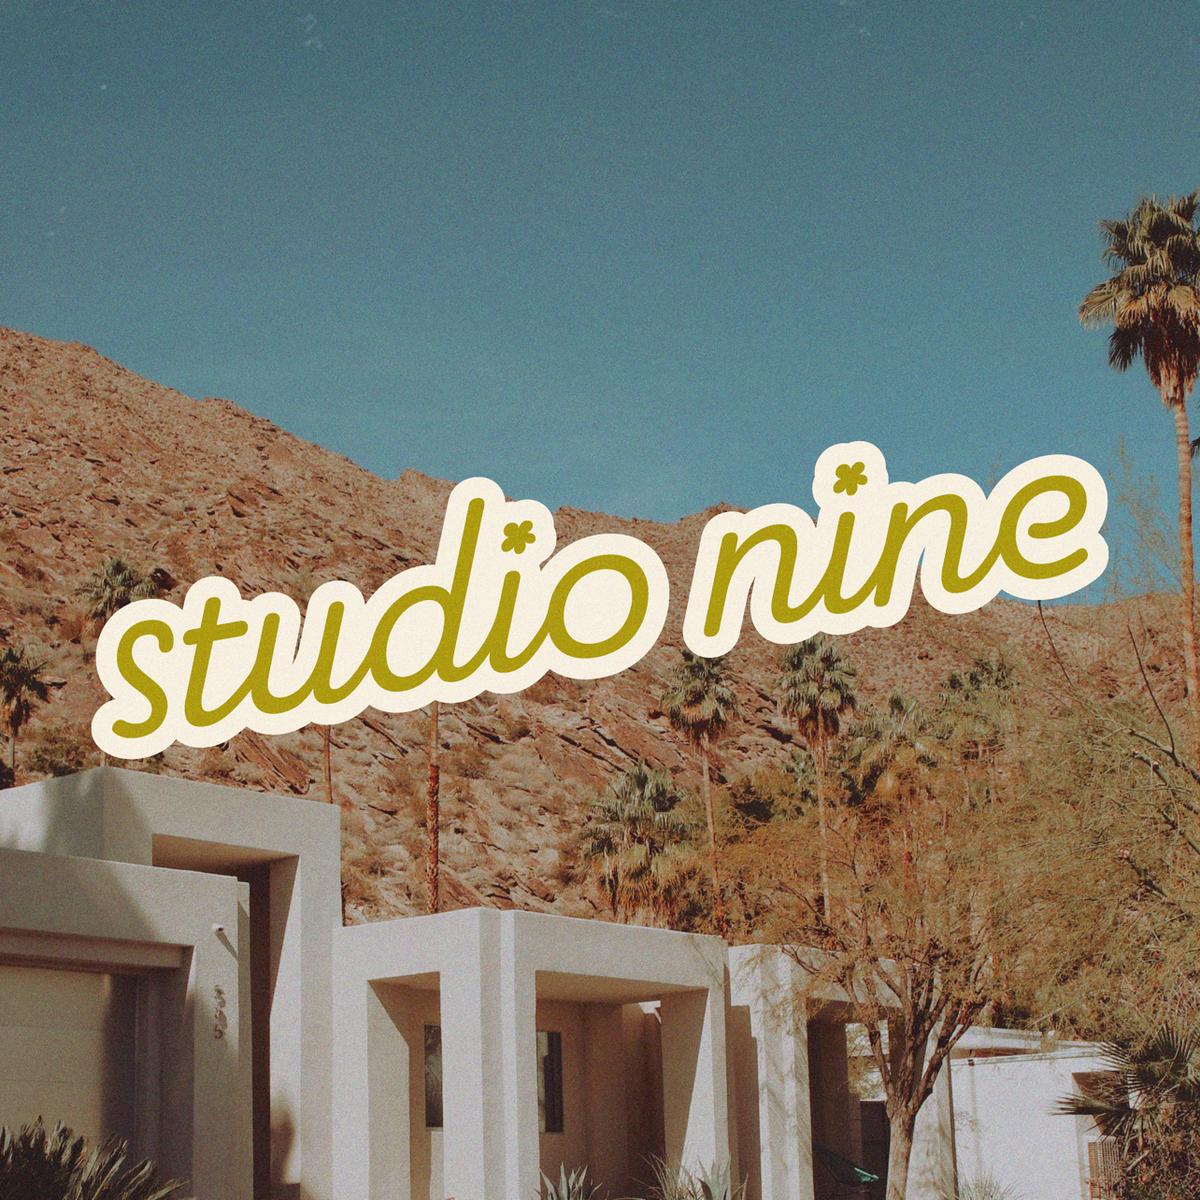 studio.nine.co's images